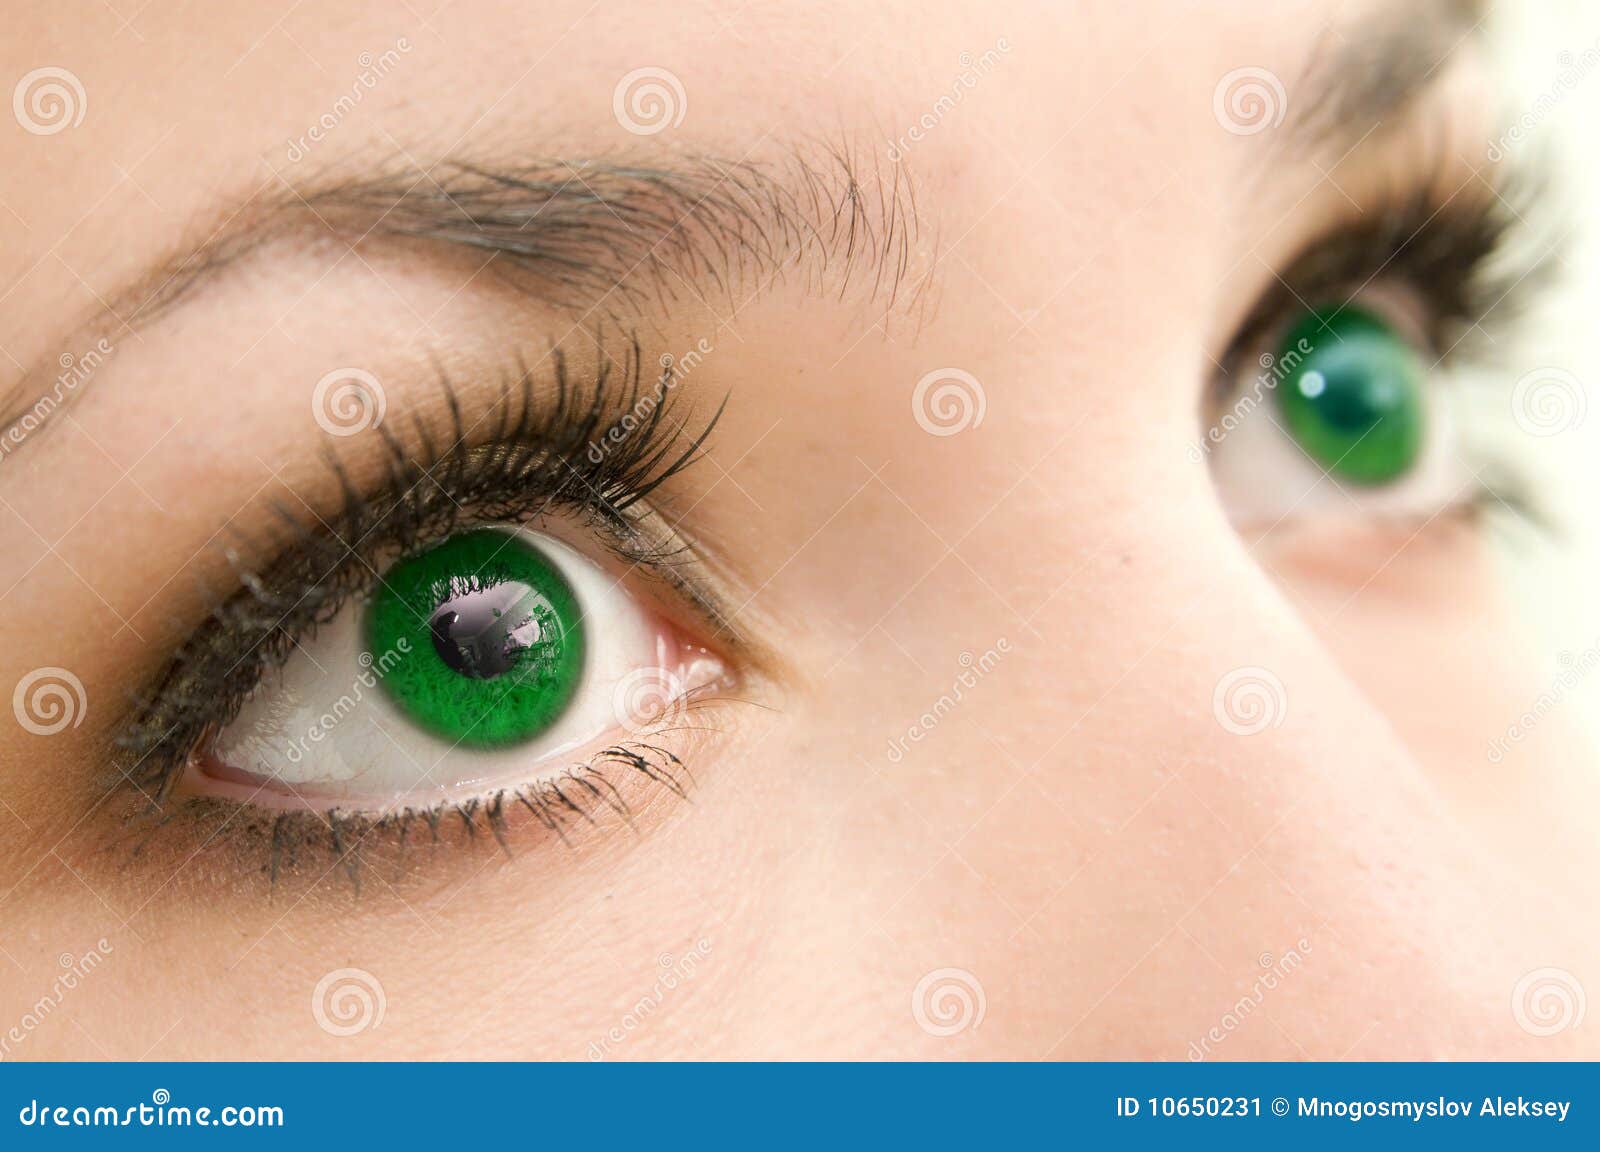 eyes-green-10650231.jpg